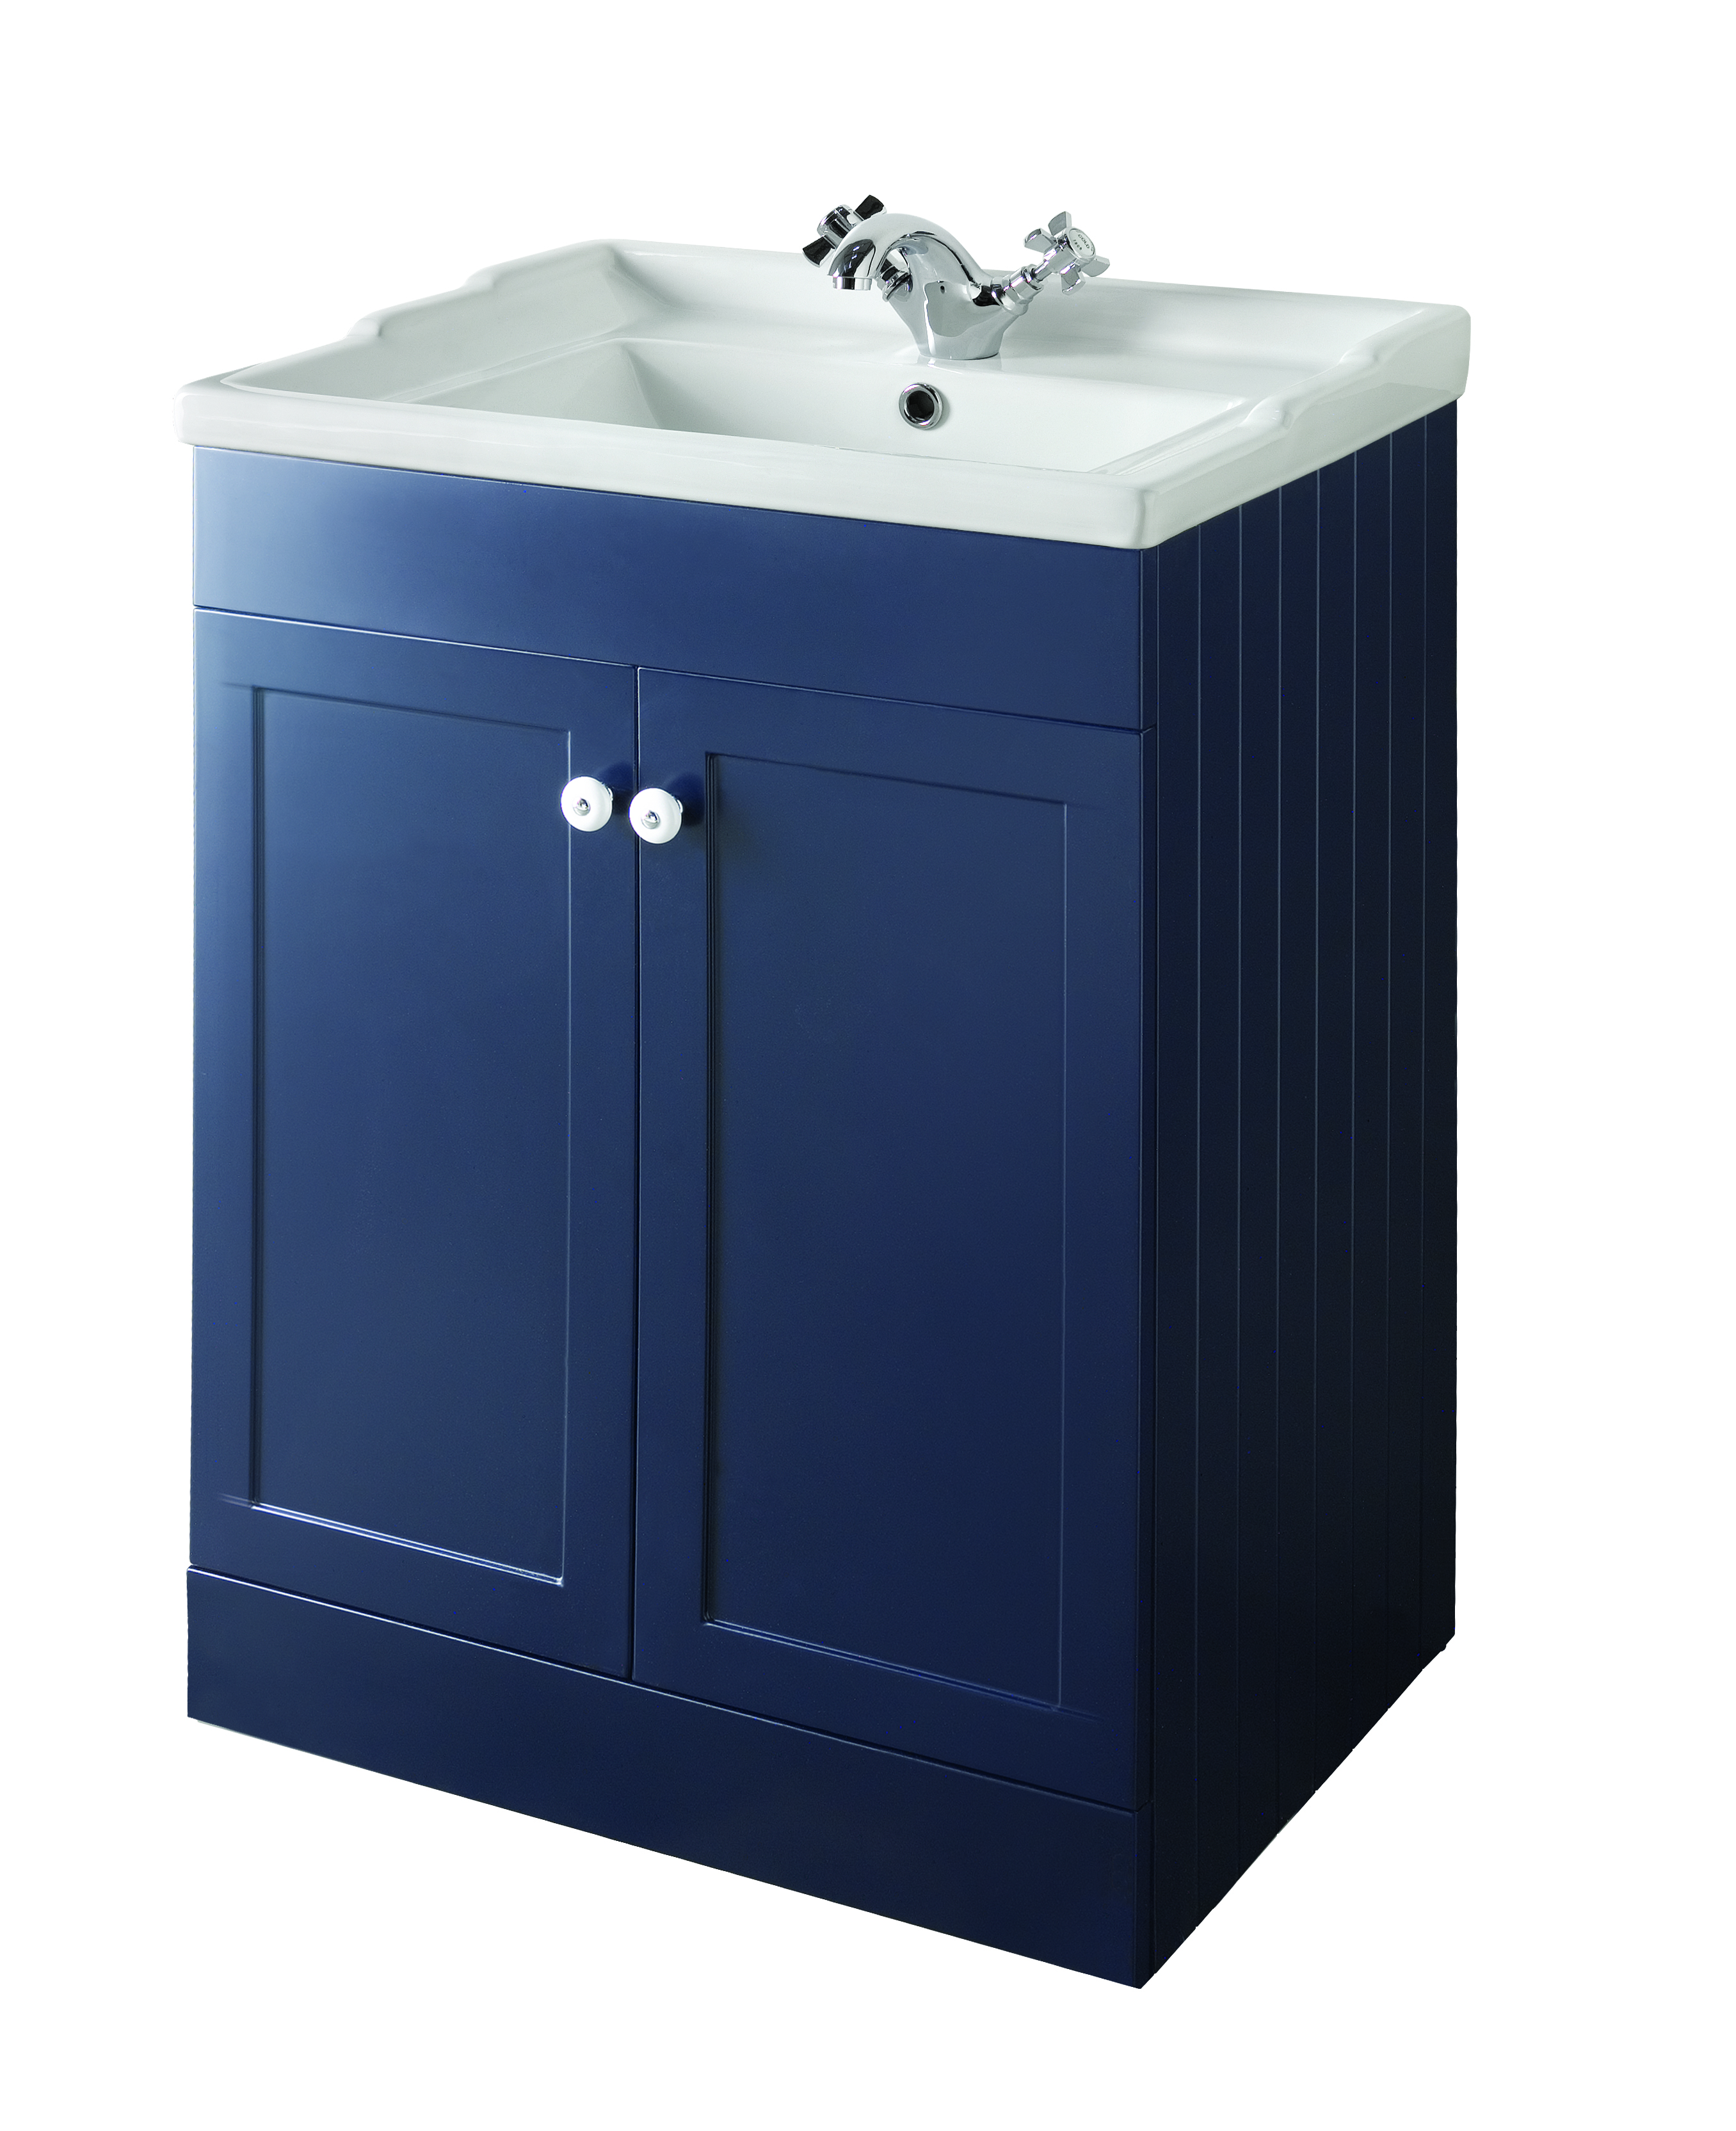 Bathroom Furniture, 600mm Unit - Matt Sapphire Blue, STRABANE WHOLESALE LTD, Strabane, Co. Tyrone